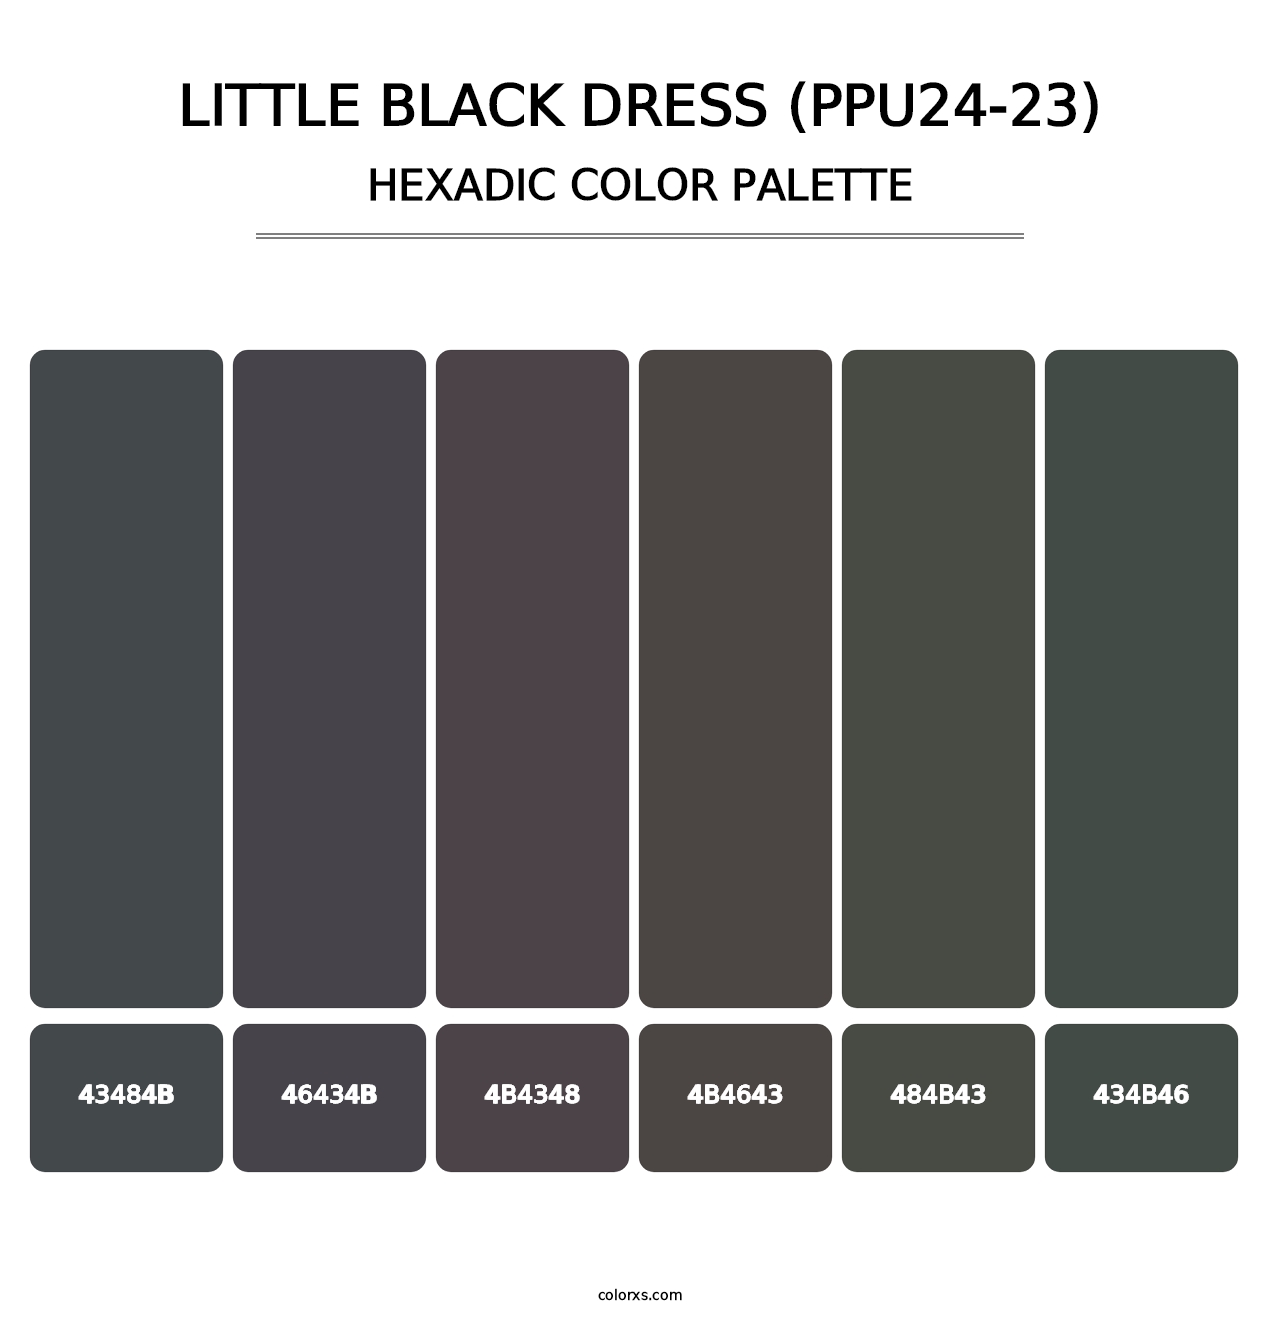 Little Black Dress (PPU24-23) - Hexadic Color Palette